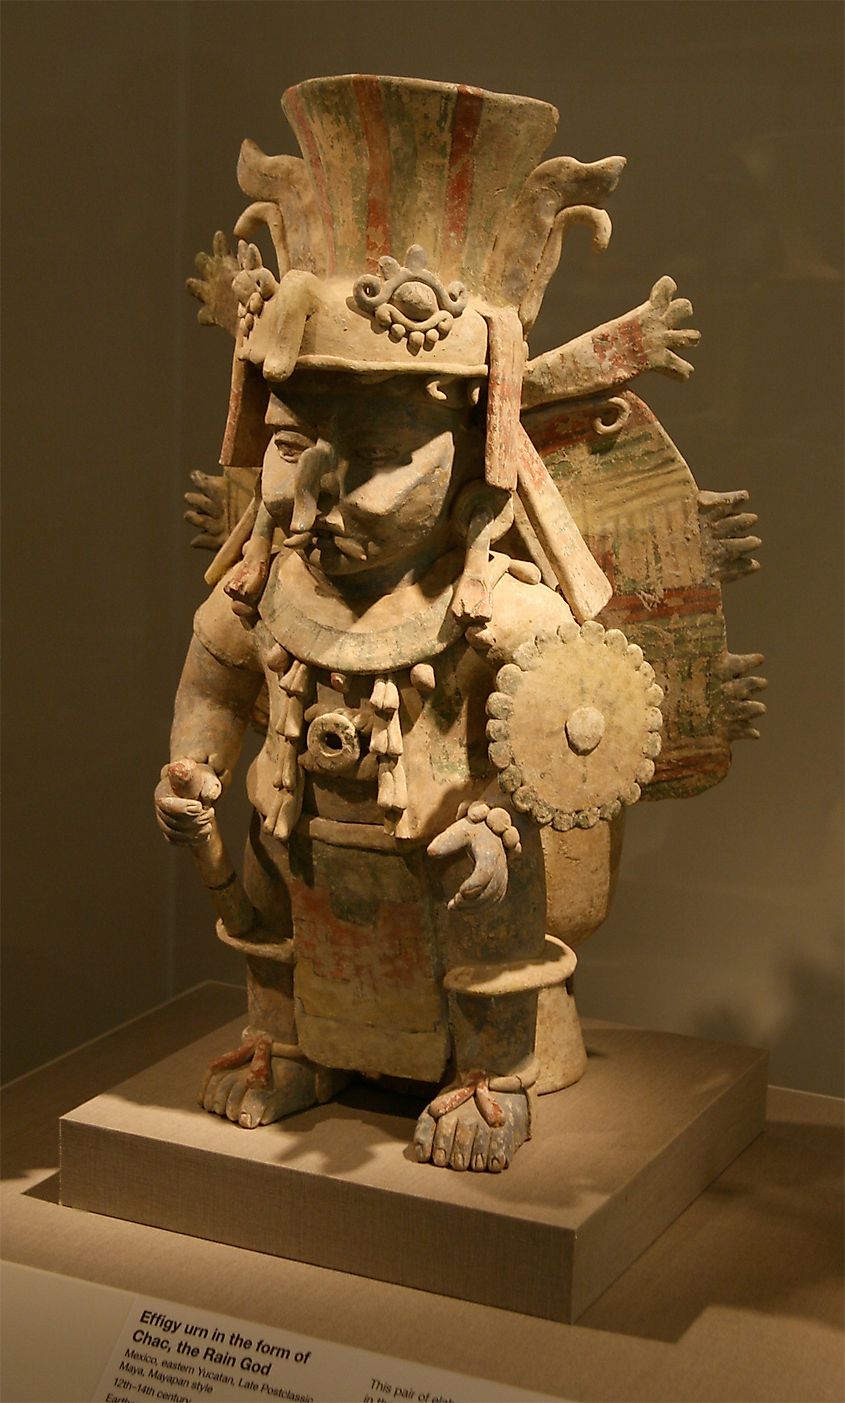 Terracotta sculpture of the Maya Rain God Chac at a museum.